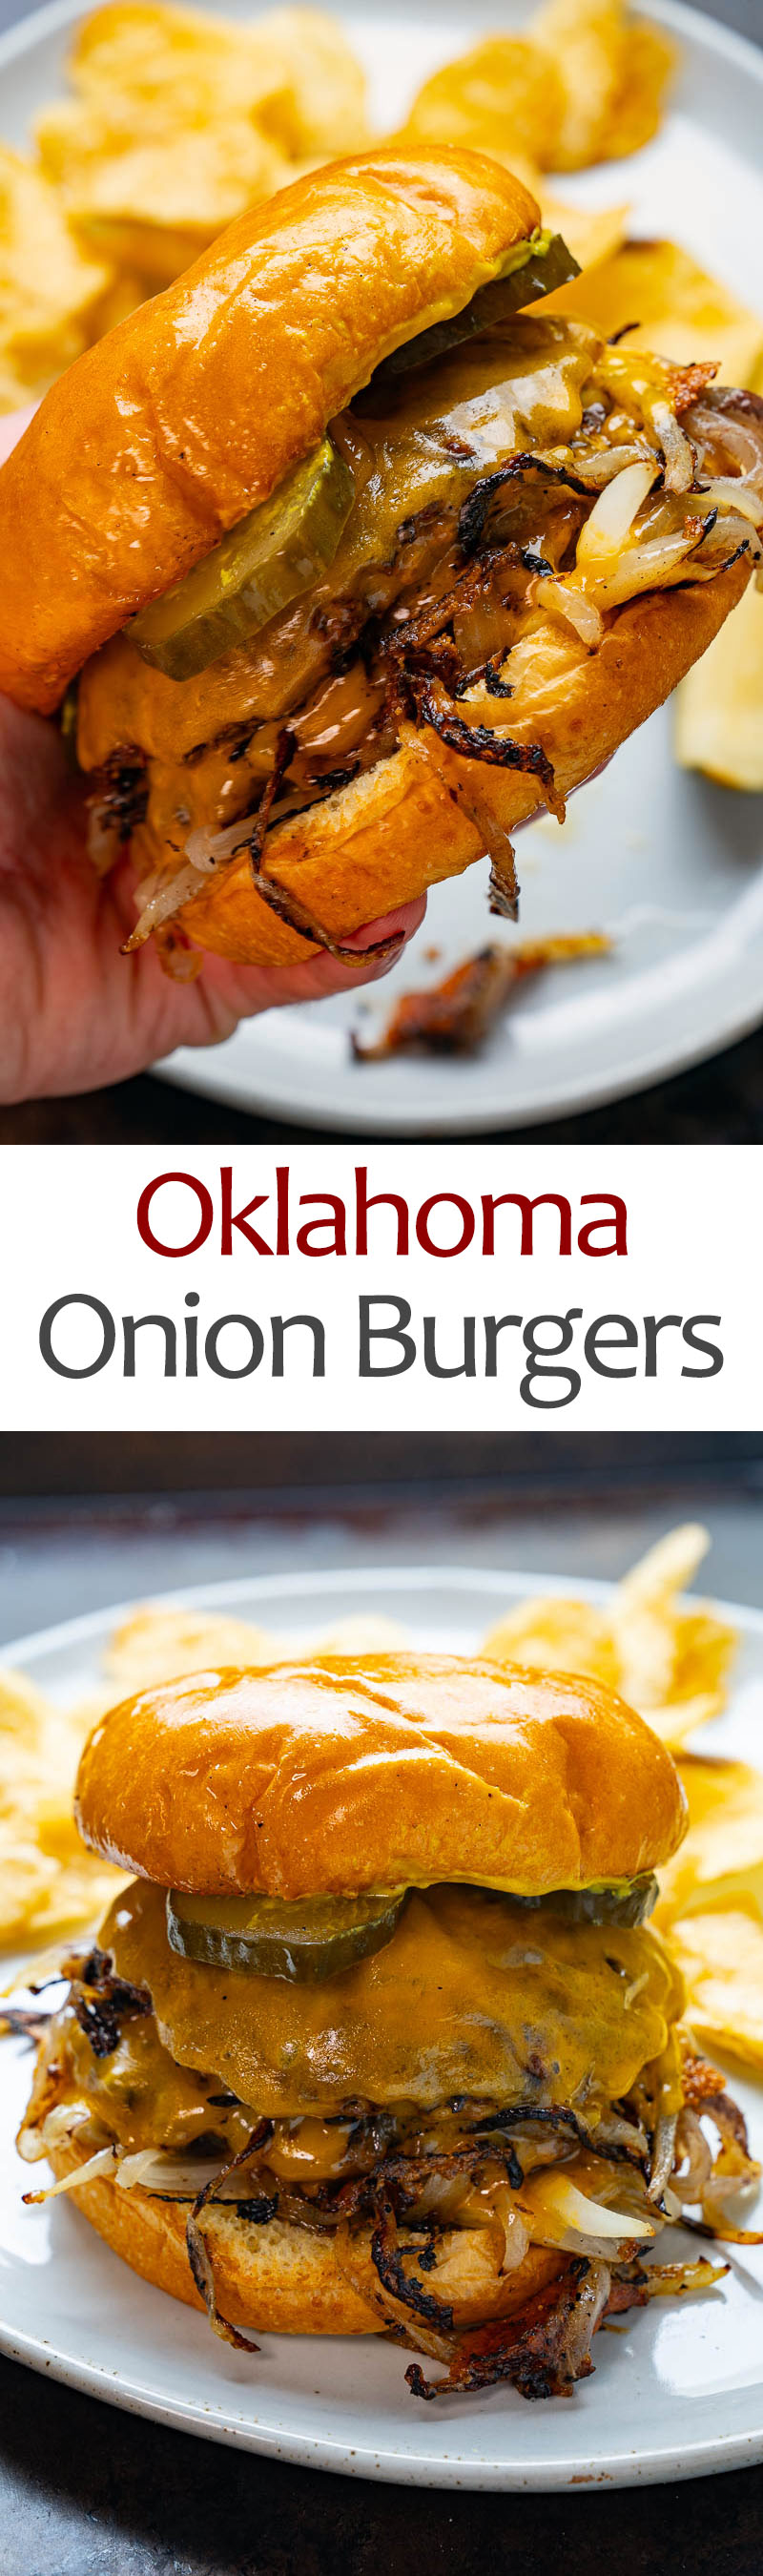 Oklahoma Onion Burgers